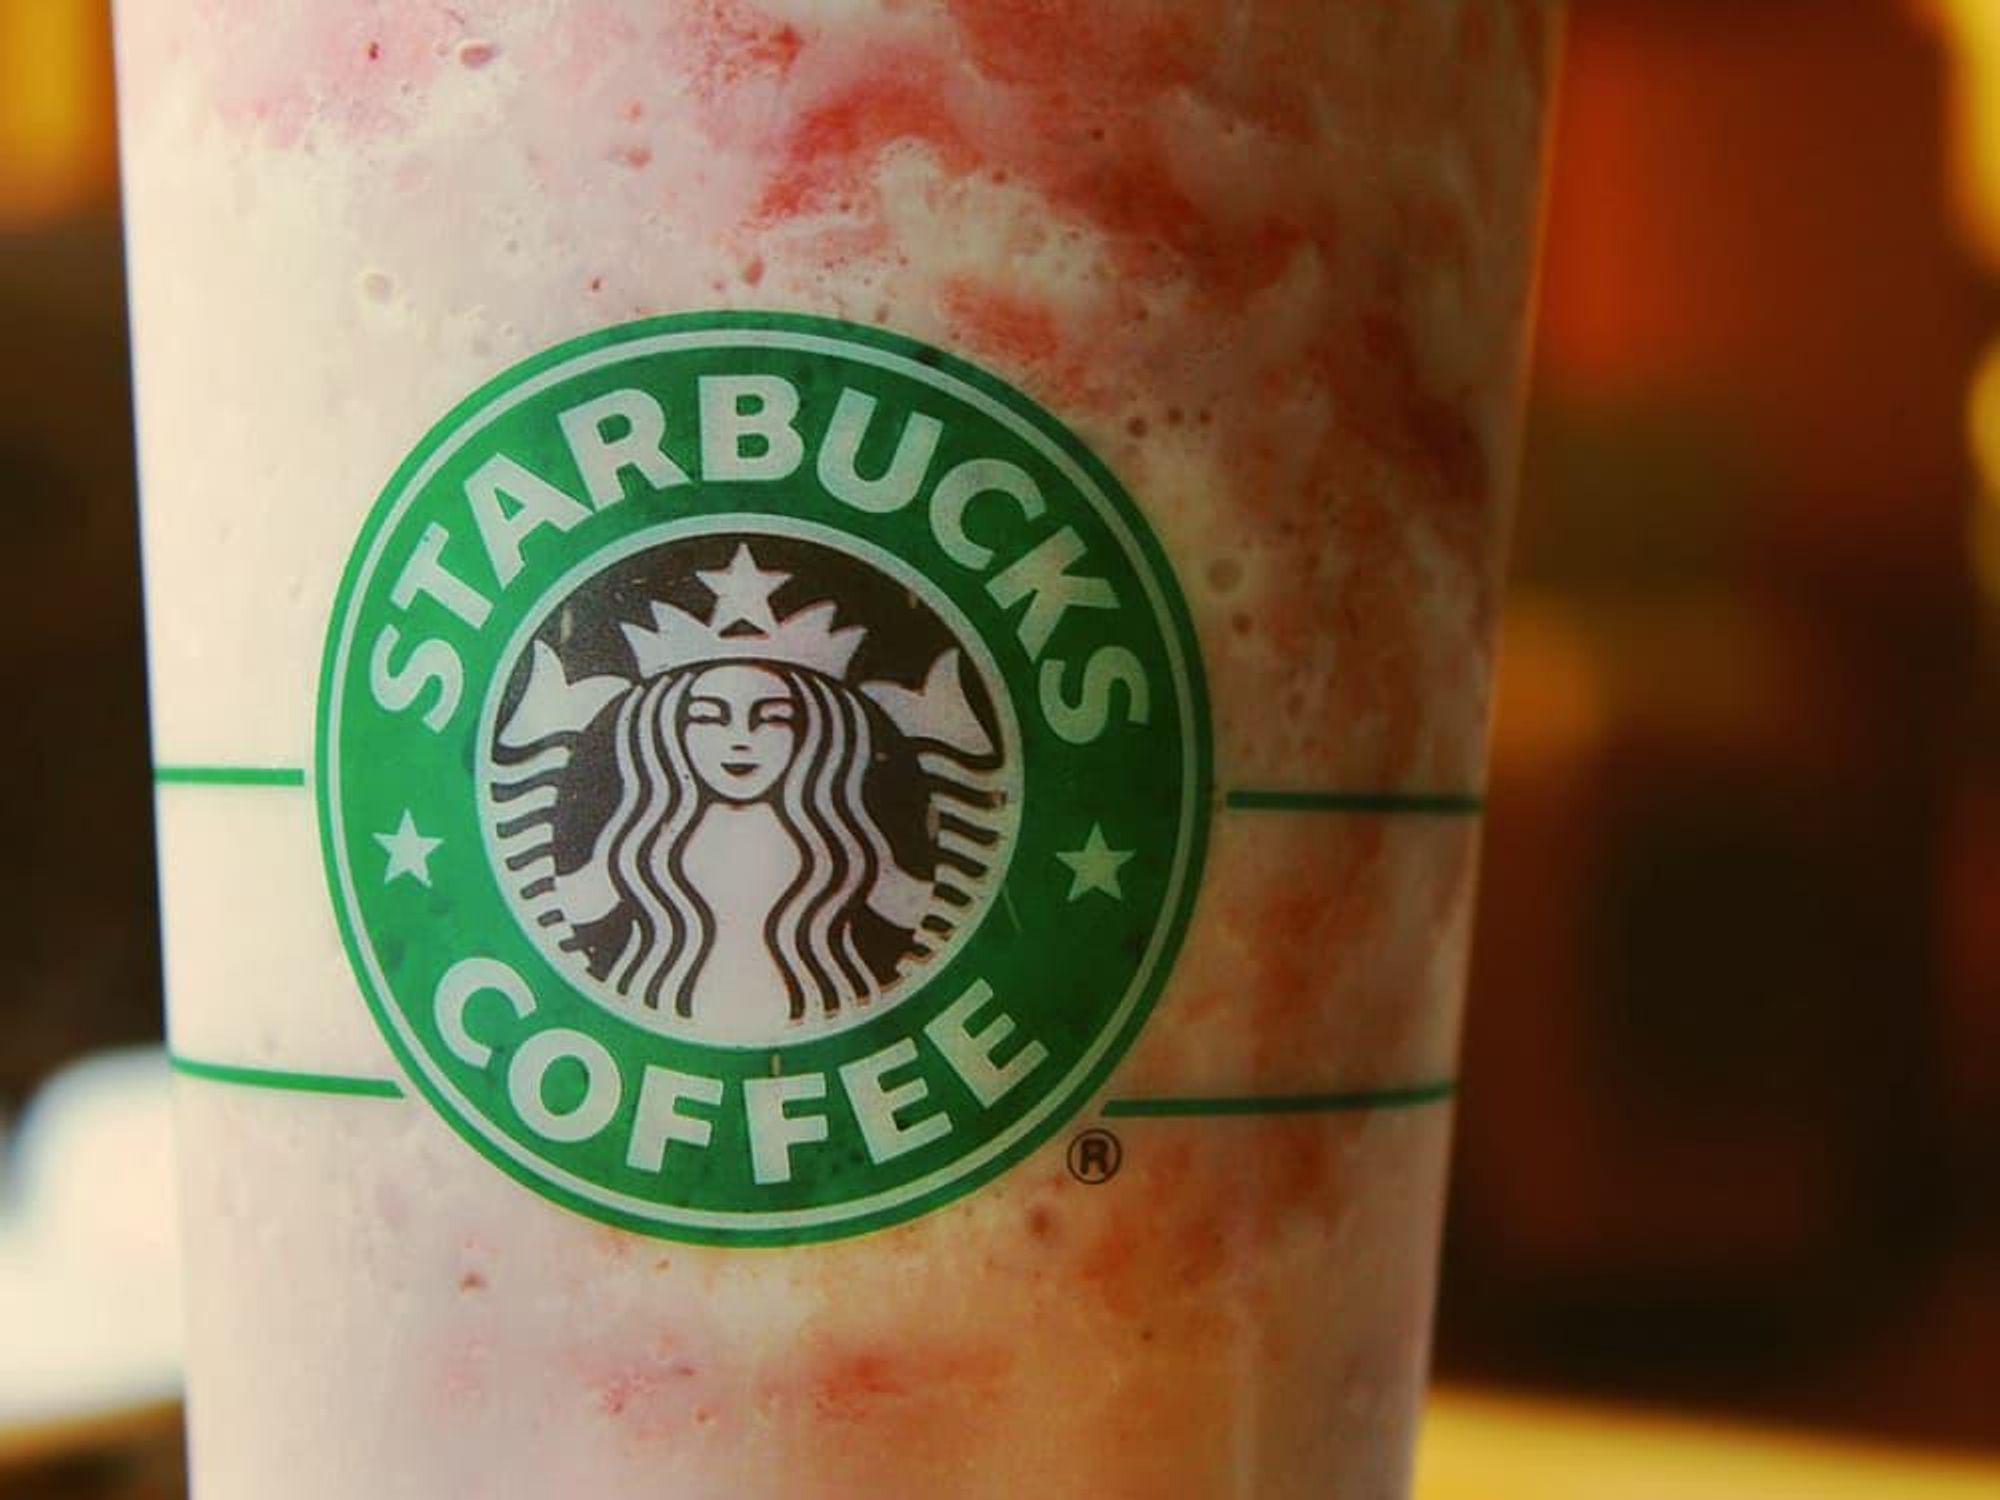 News_Starbucks_strawberry frappuccino